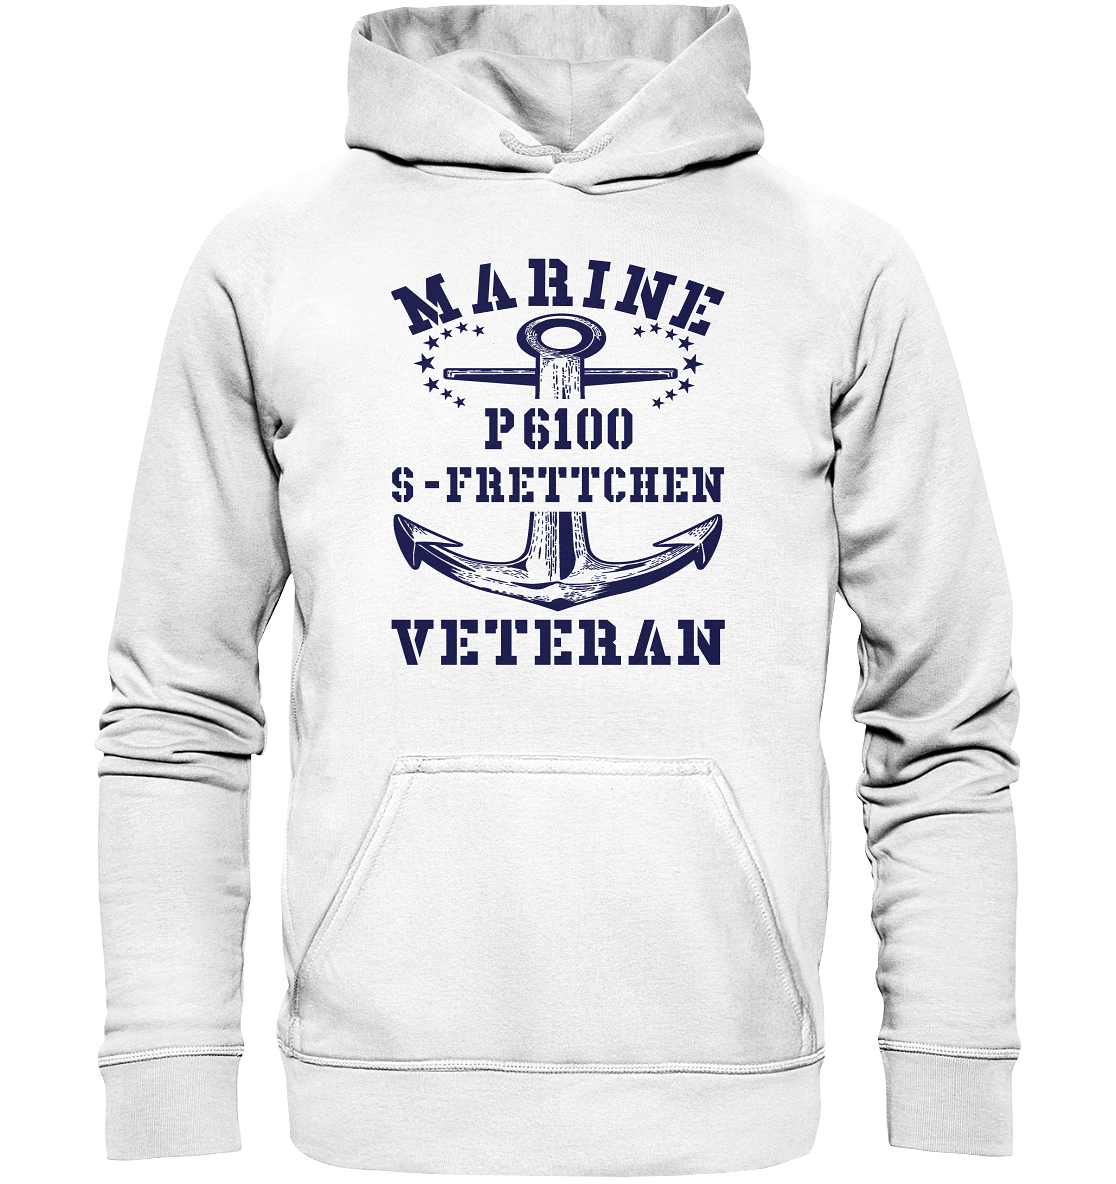 P6100 S-FRETTCHEN Marine Veteran - Basic Unisex Hoodie